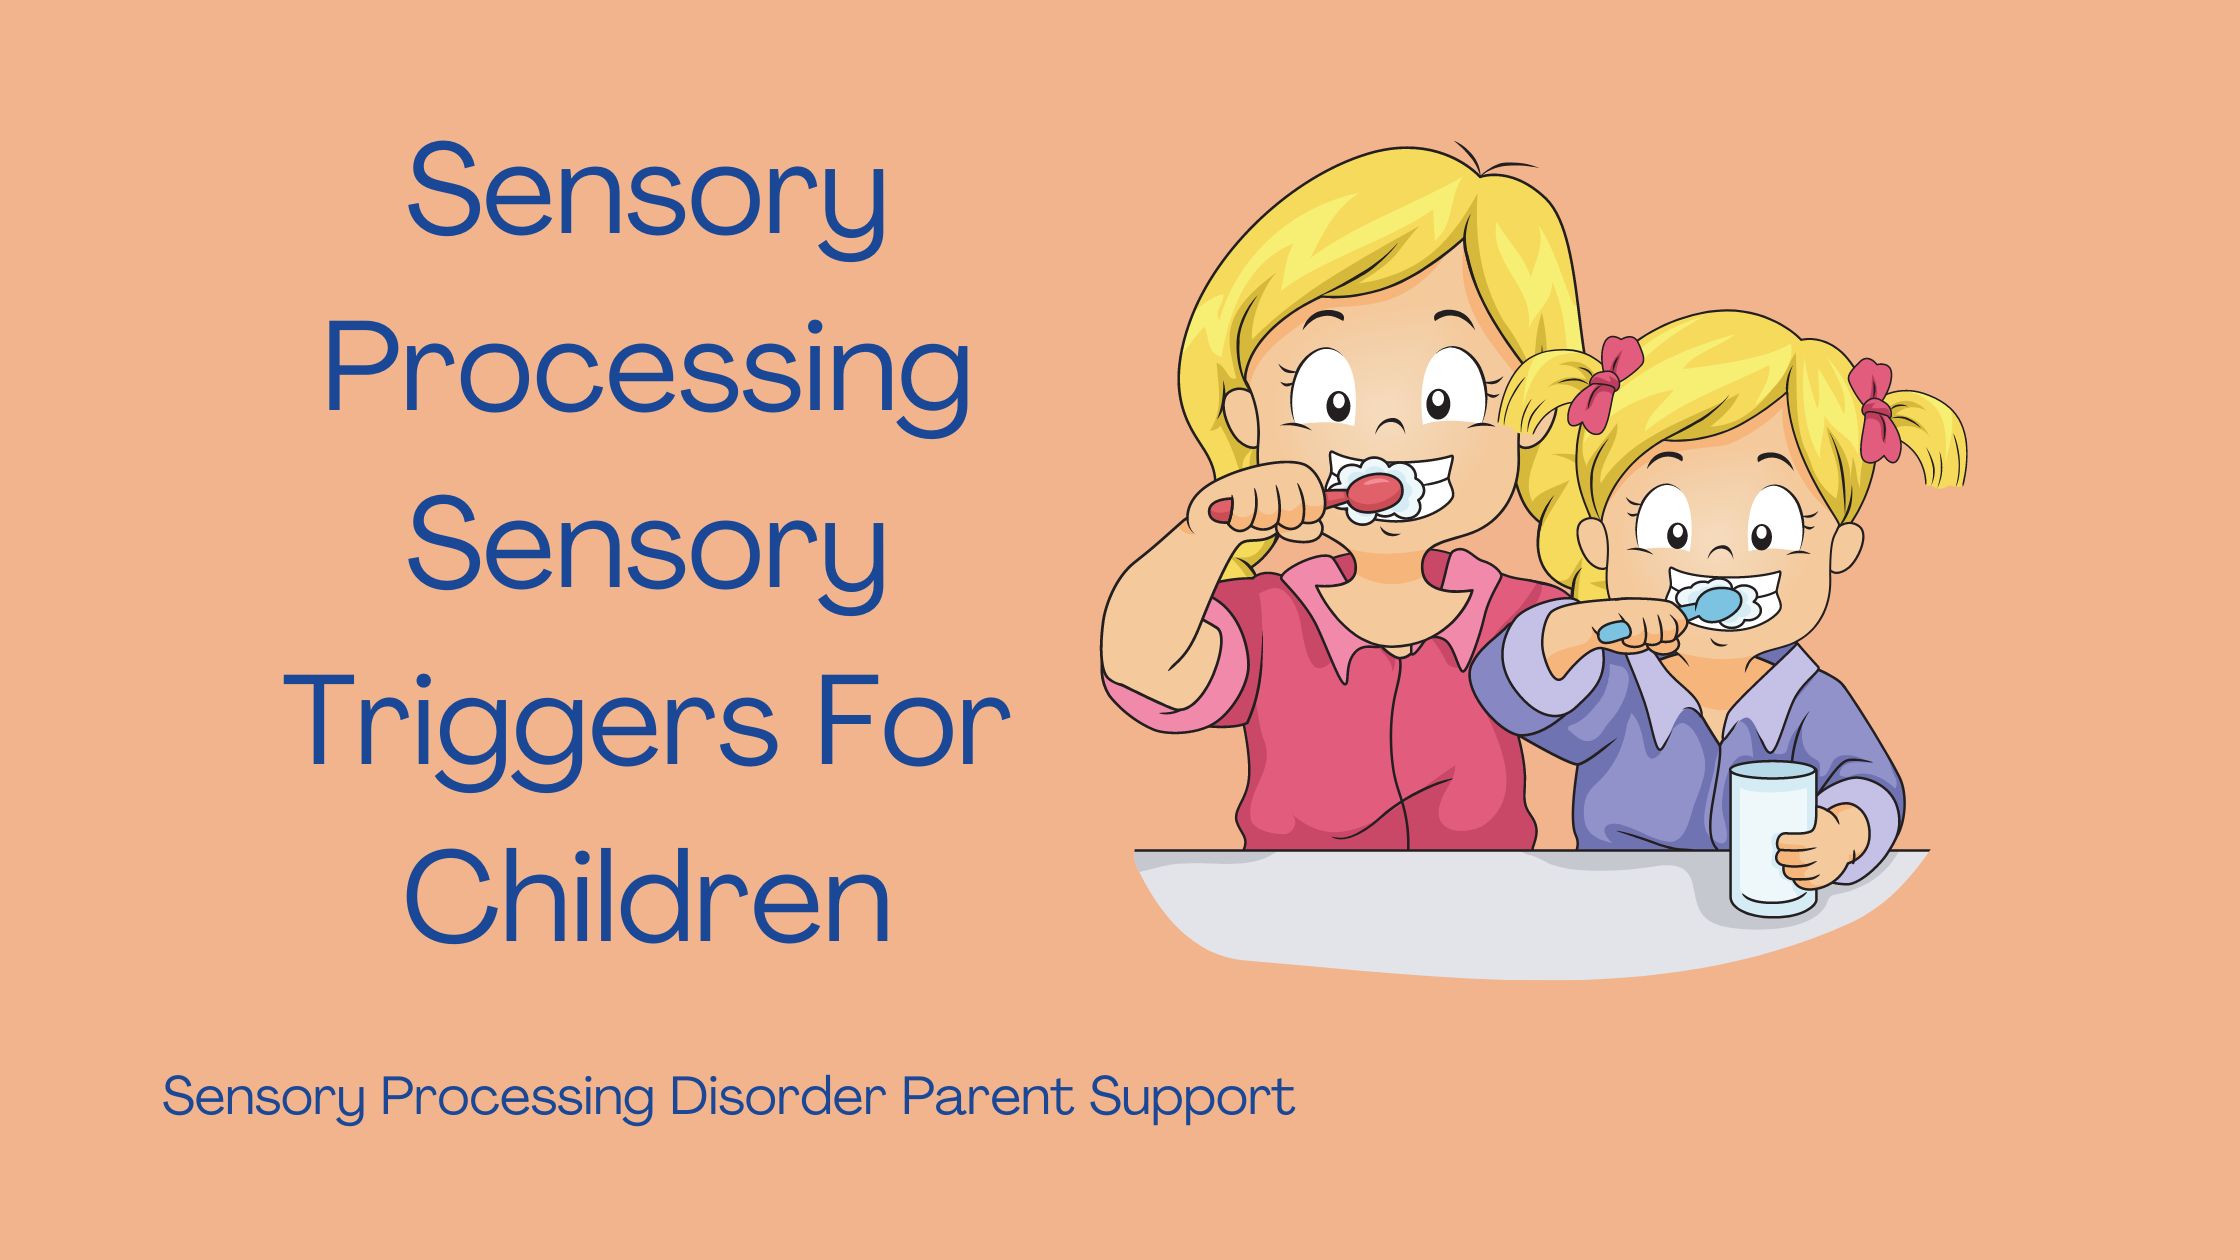 two children brushing their teeth Sensory Processing Sensory Triggers For Children